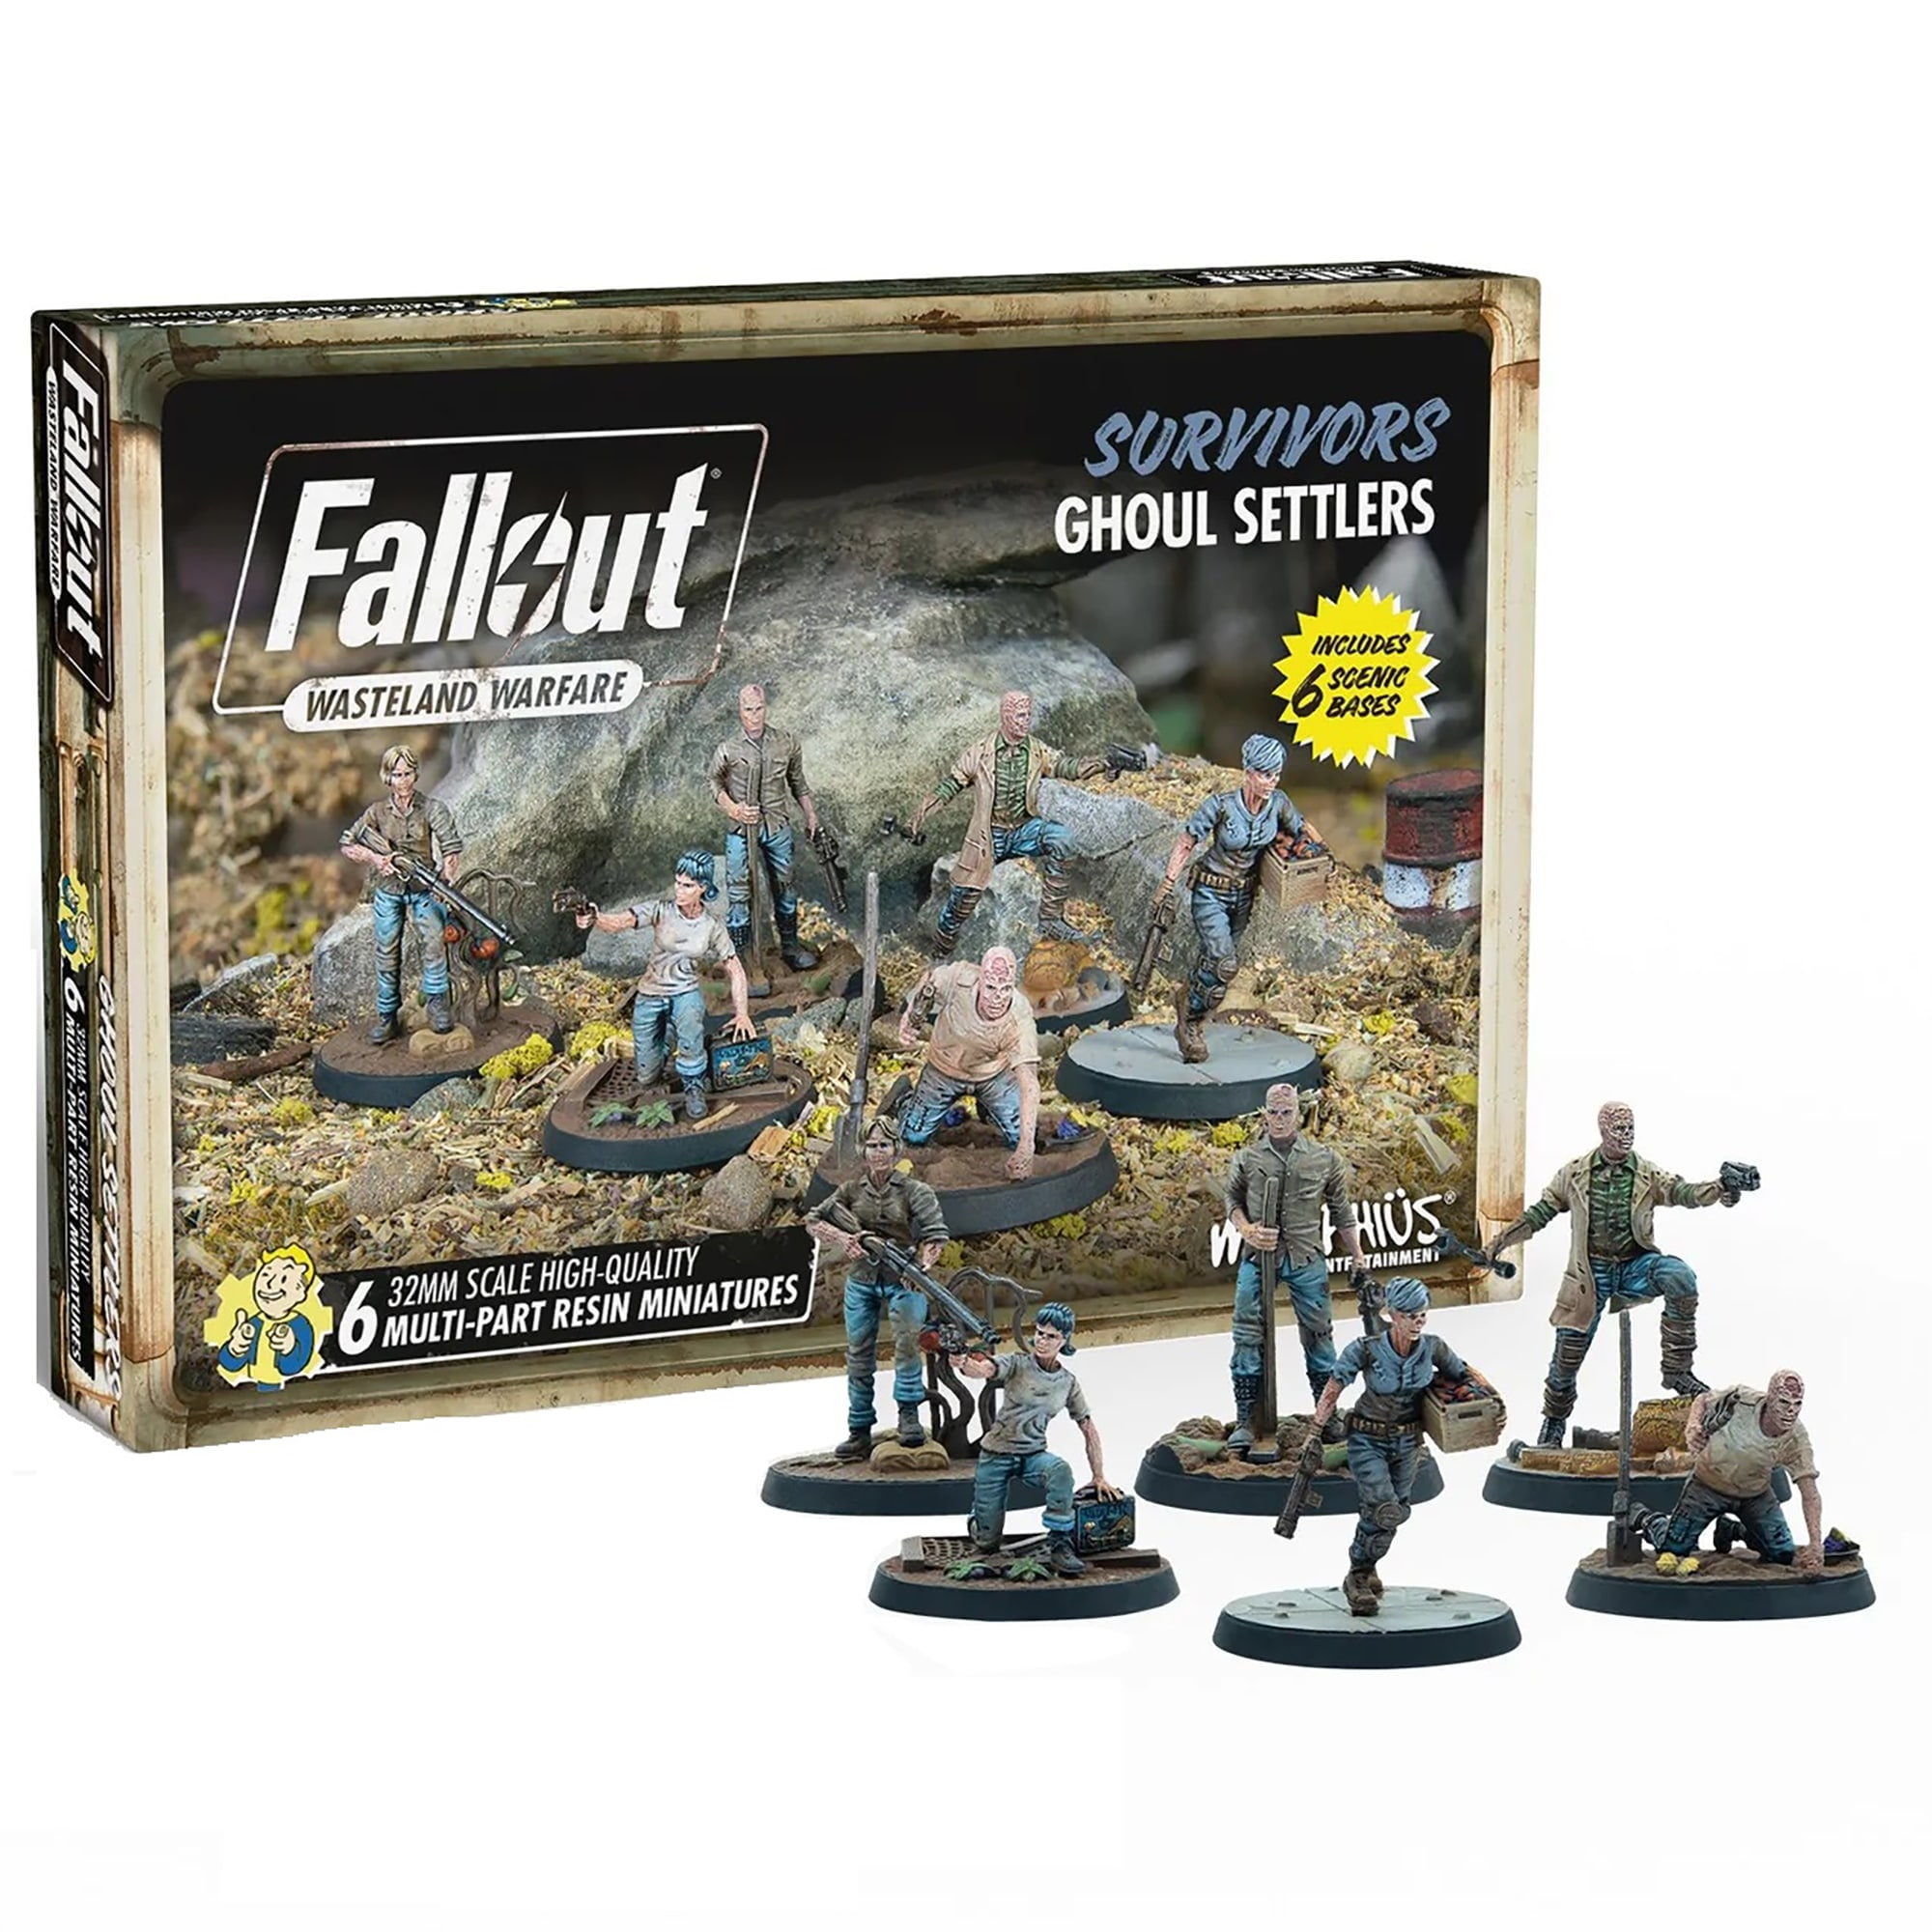 LITKO Range Ruler Set | Fallout: Wasteland Warfare | Multi-Color Set